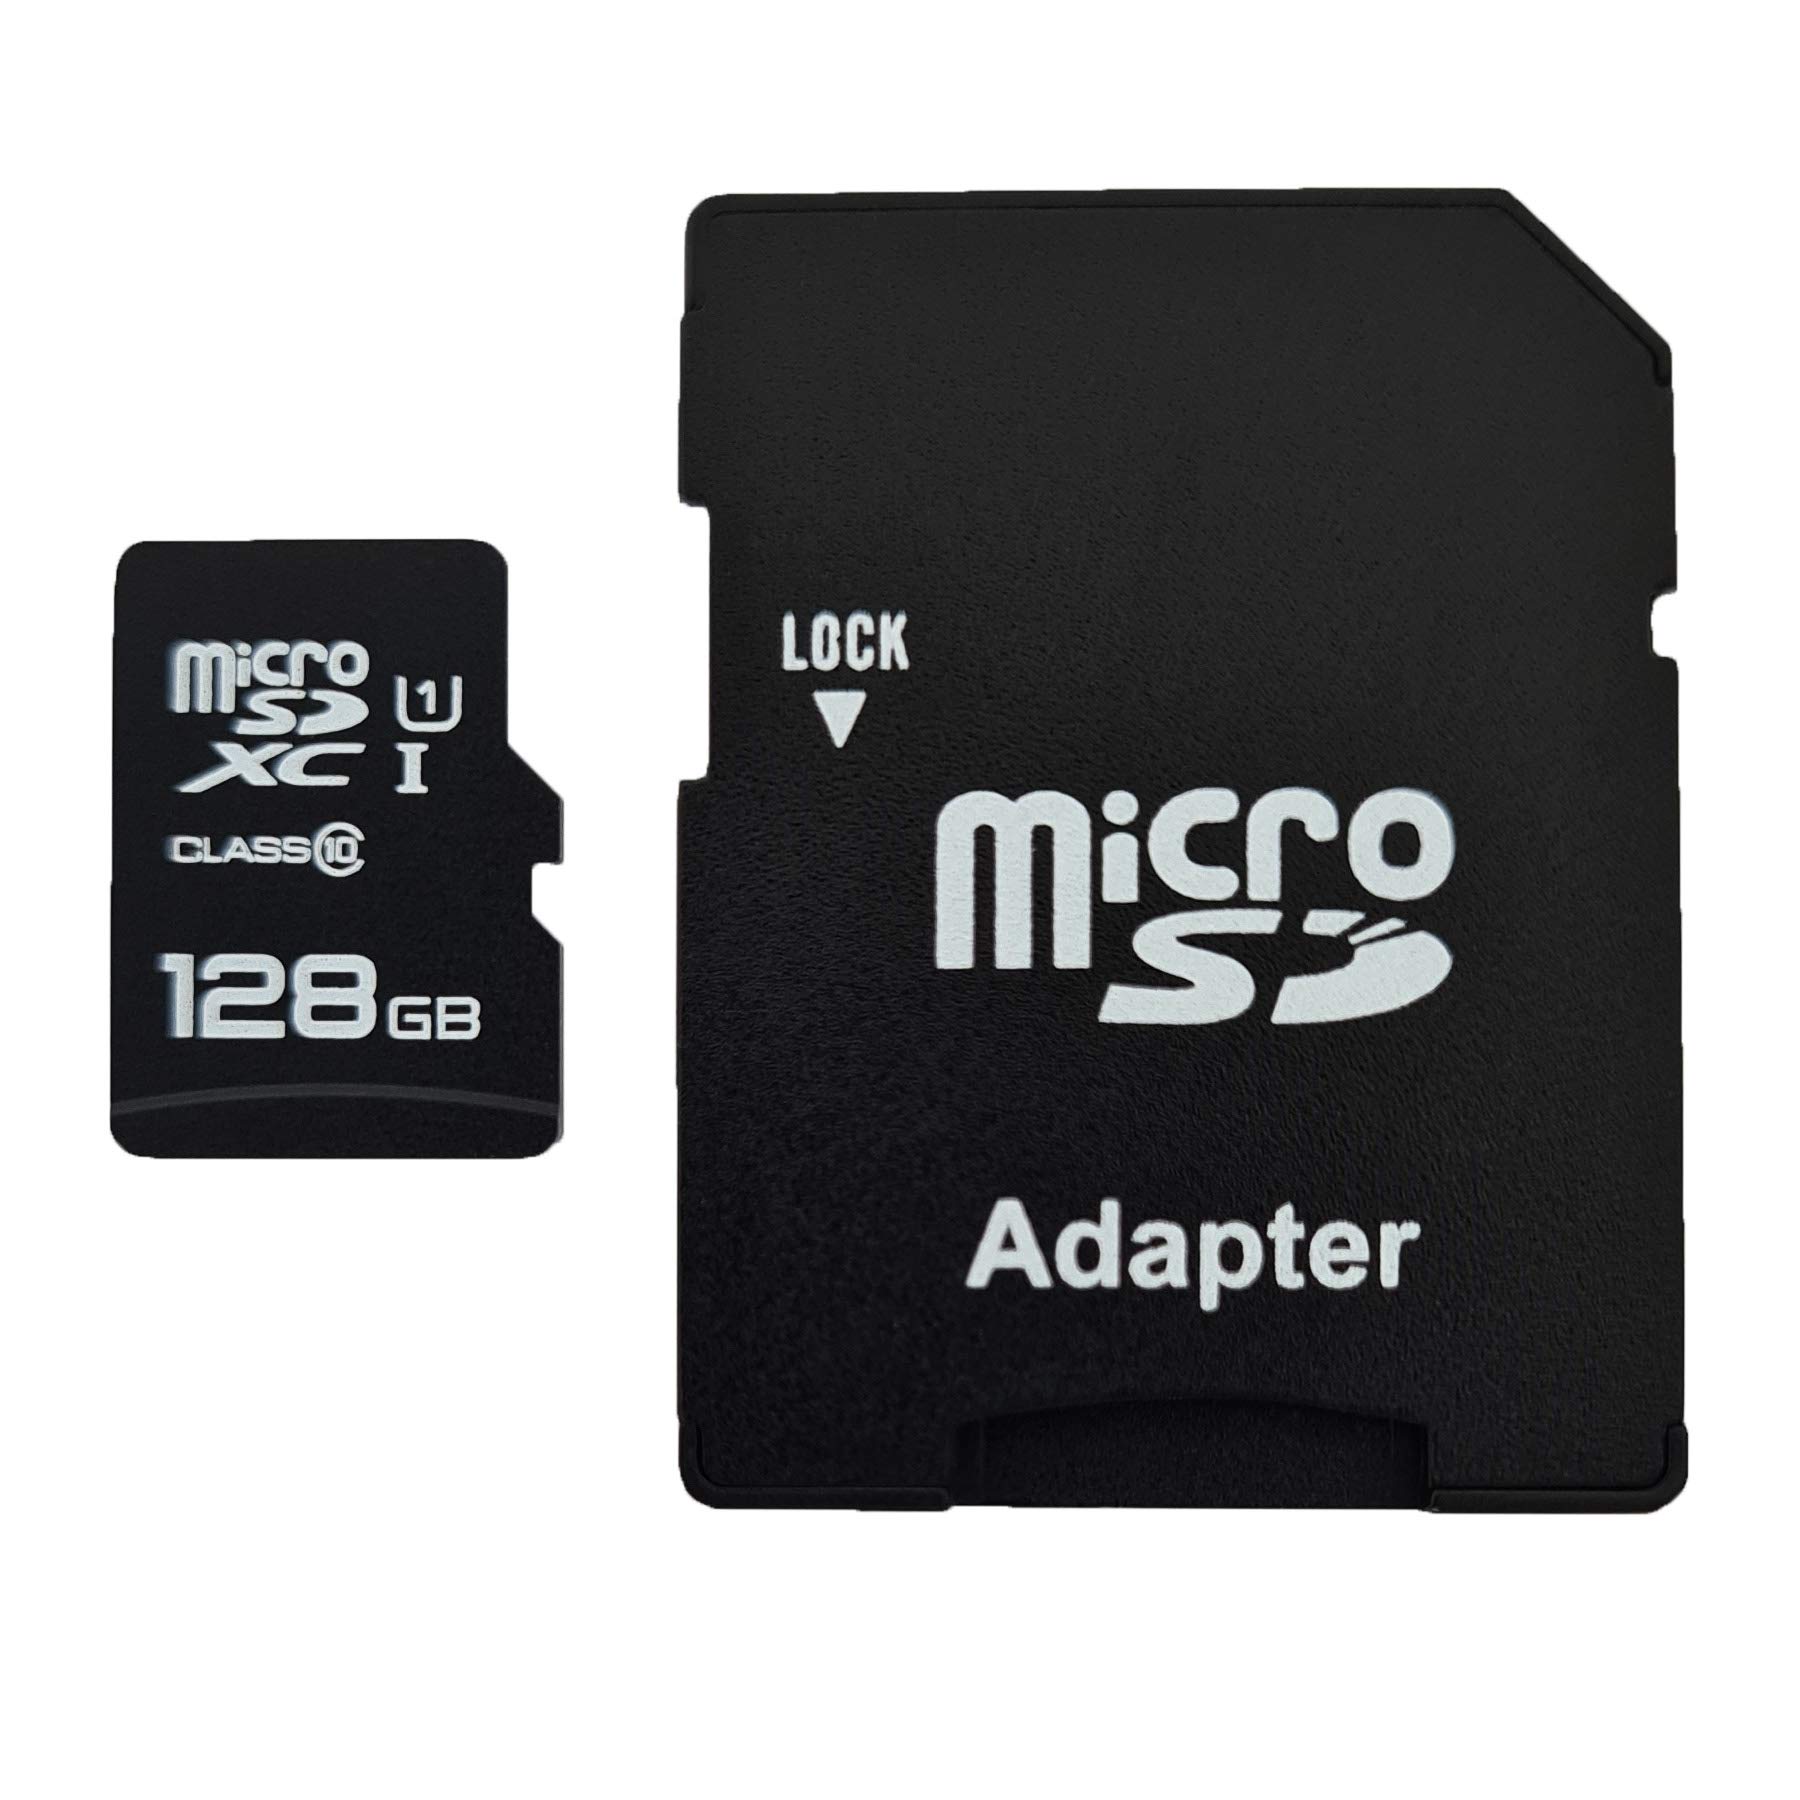 dekoelektropunktde 128GB MicroSDXC Speicherkarte mit Adapter Class 10 kompatibel für Acer Iconia A1-810